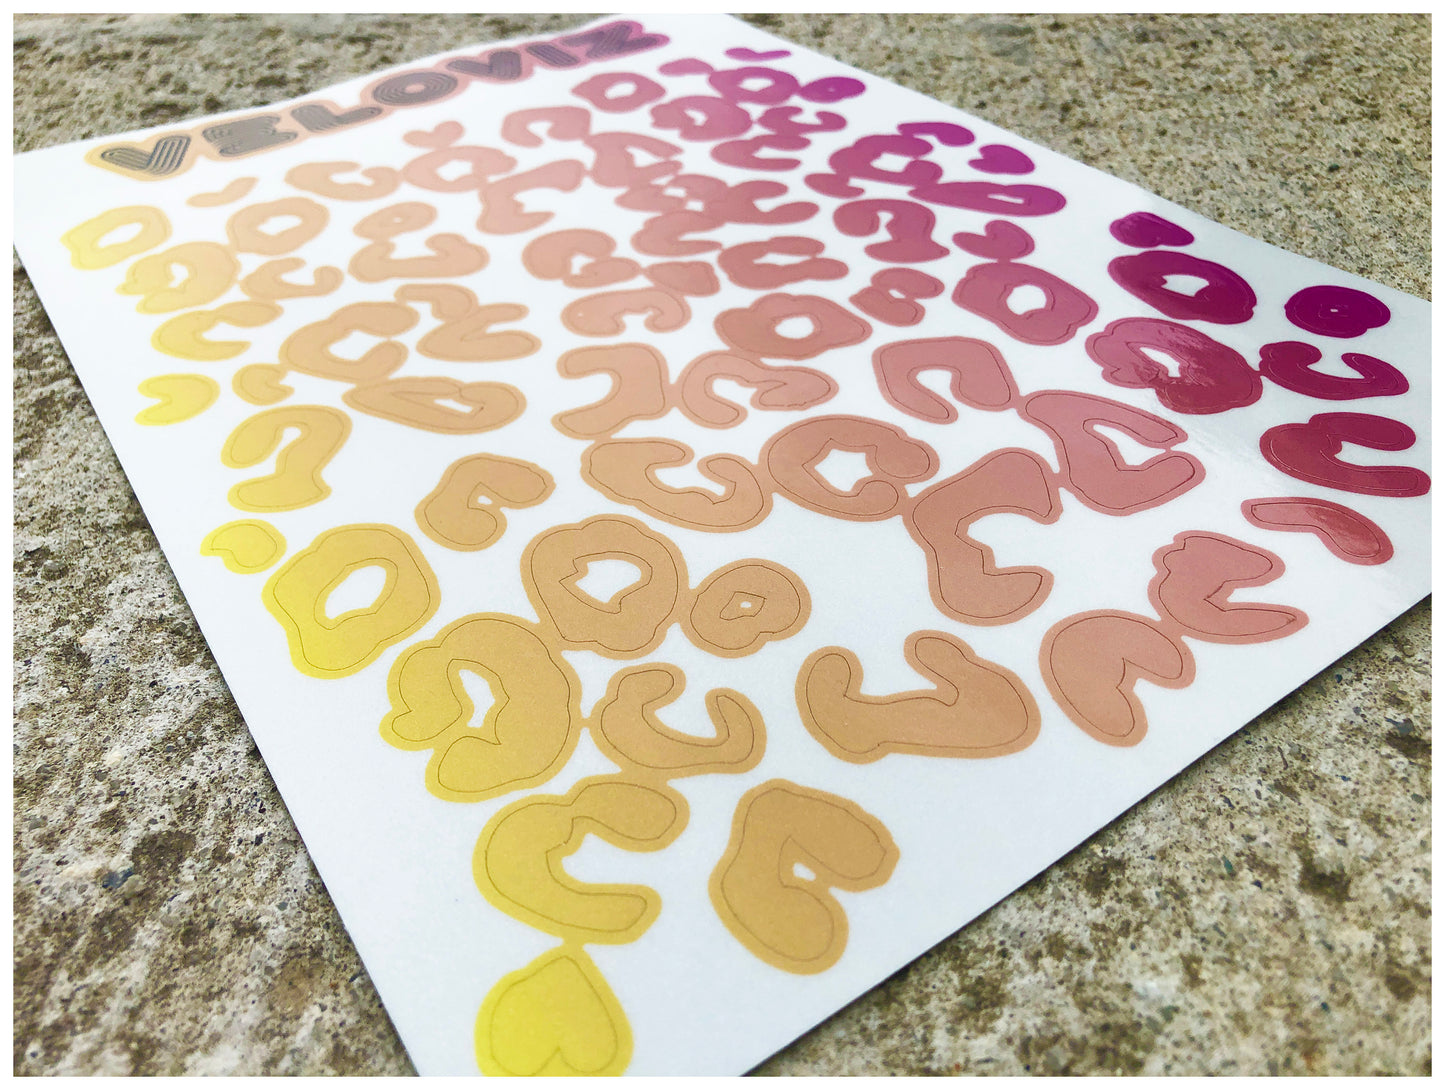 Reflective Leopard Print A4 Cargo Bike Stickers - Magenta Yellow Fade